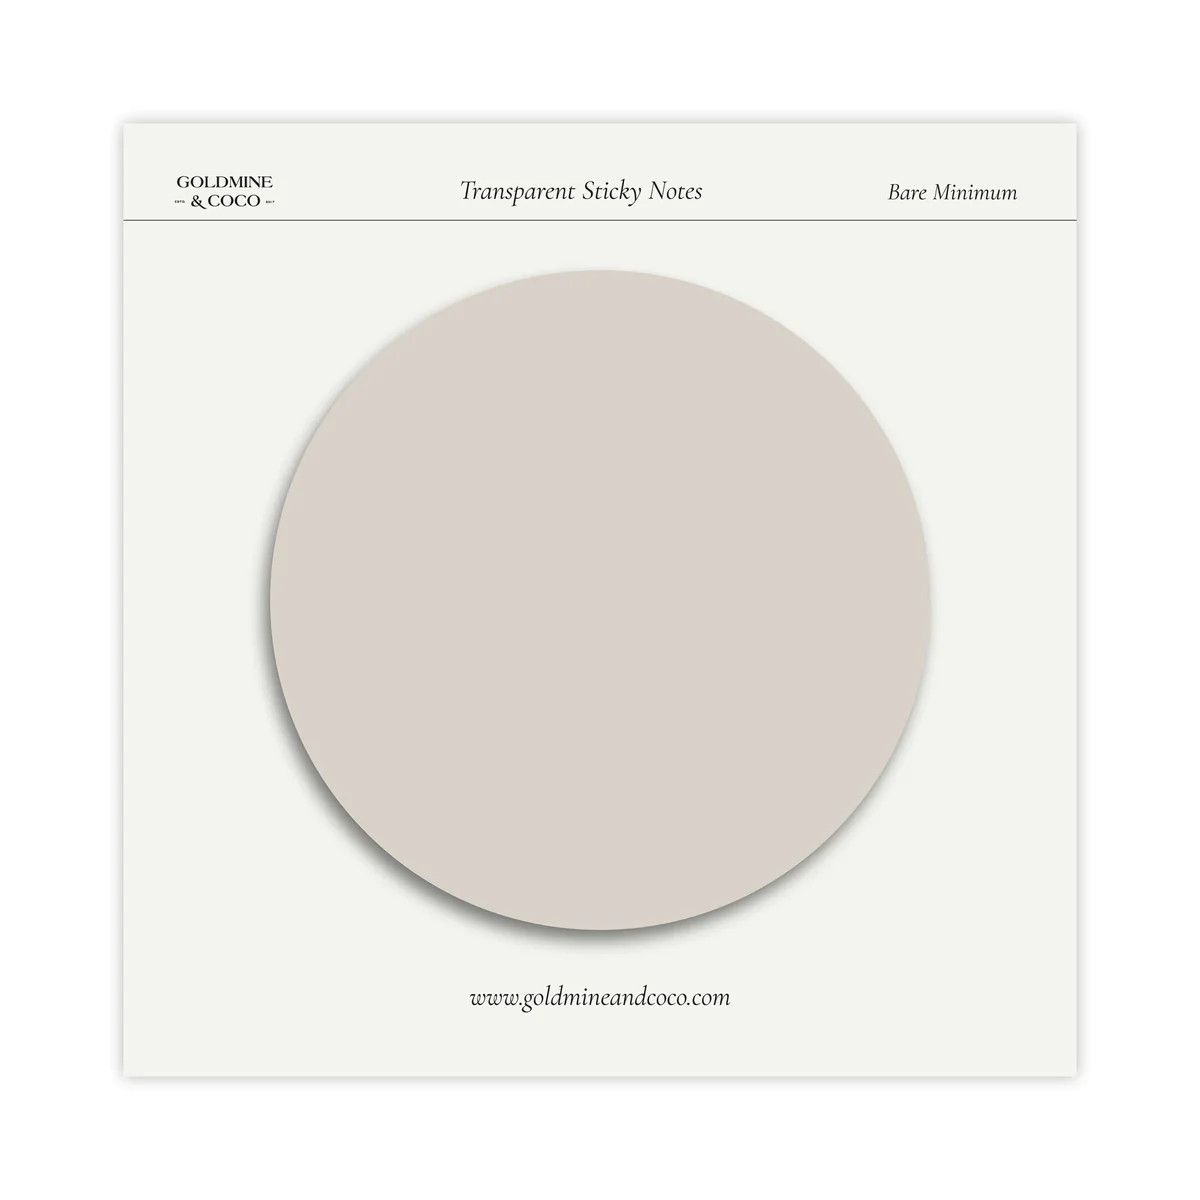 Bare Minimum Round Transparent Sticky Notes | Goldmine & Coco